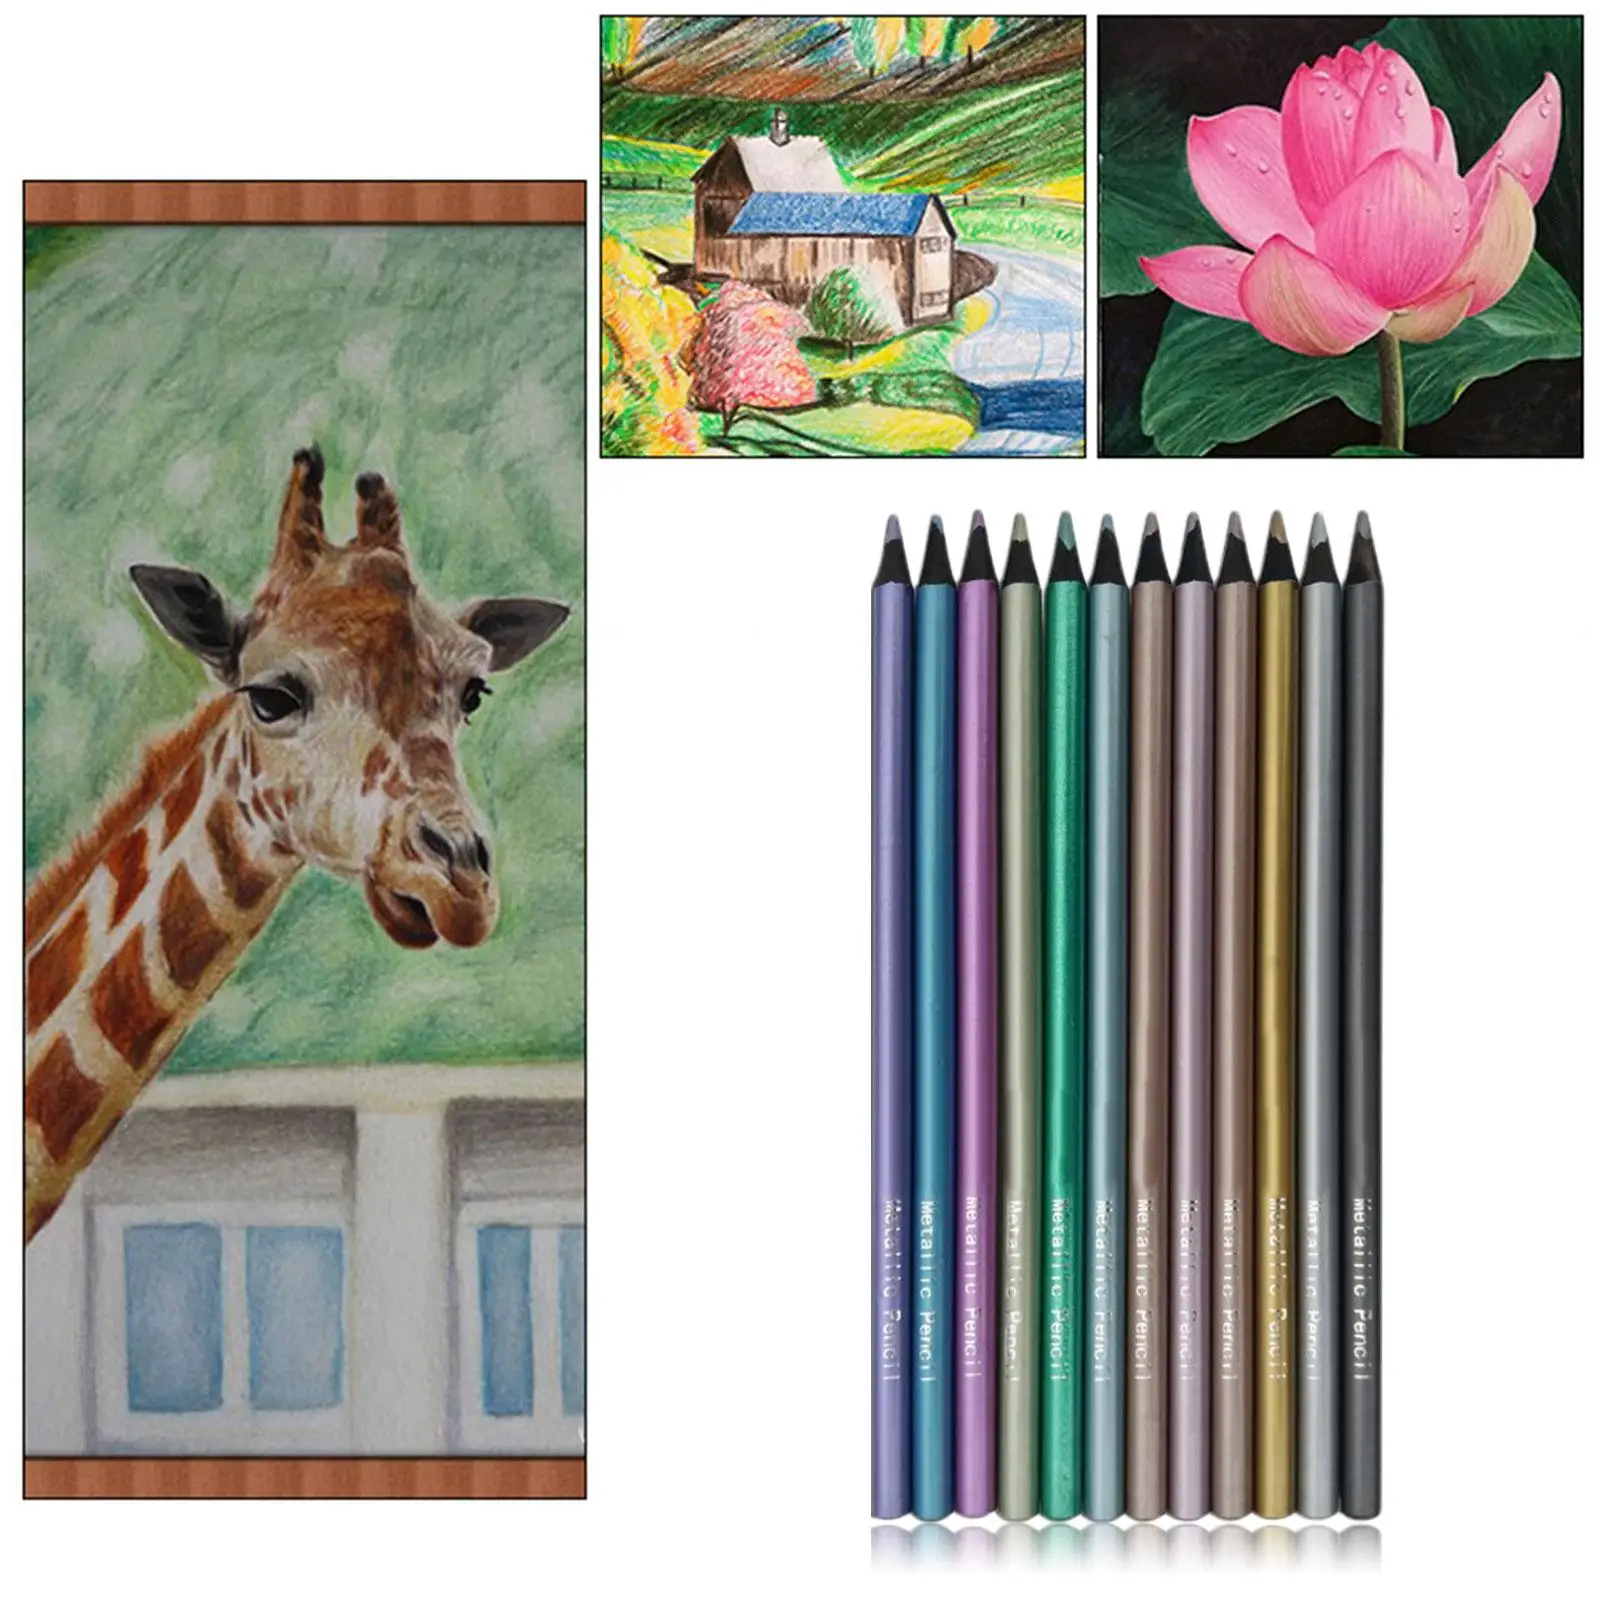 12Pcs Drawing Metallic Pencil Set Professional Art Sketching Pencils Graphite Colored Pencils Painting Adults Kids Beginner